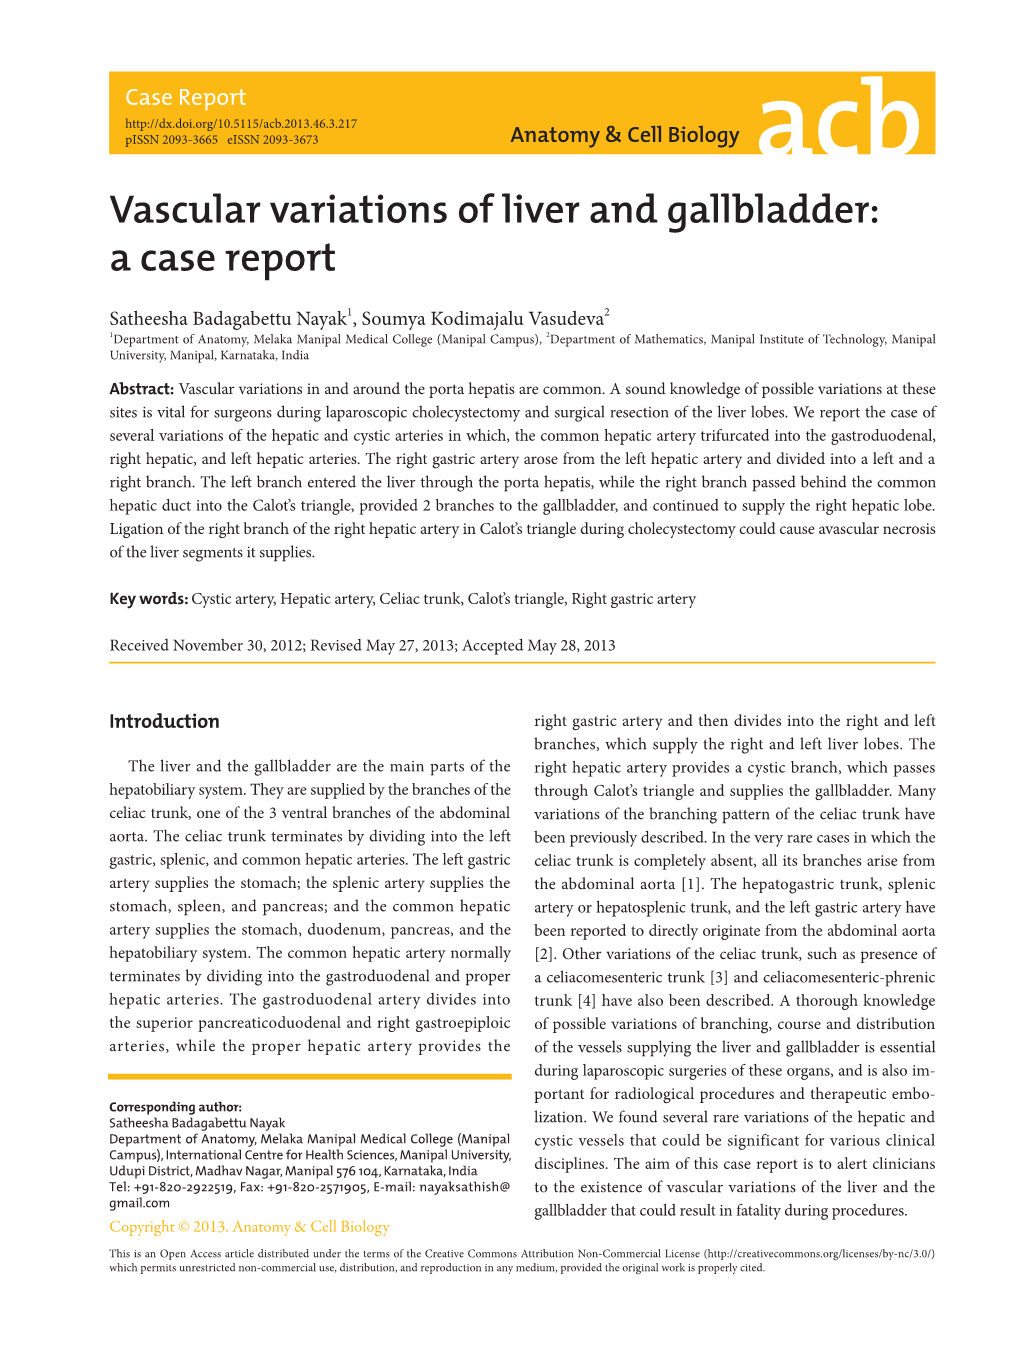 Vascular Variations of Liver and Gallbladder: a Case Report